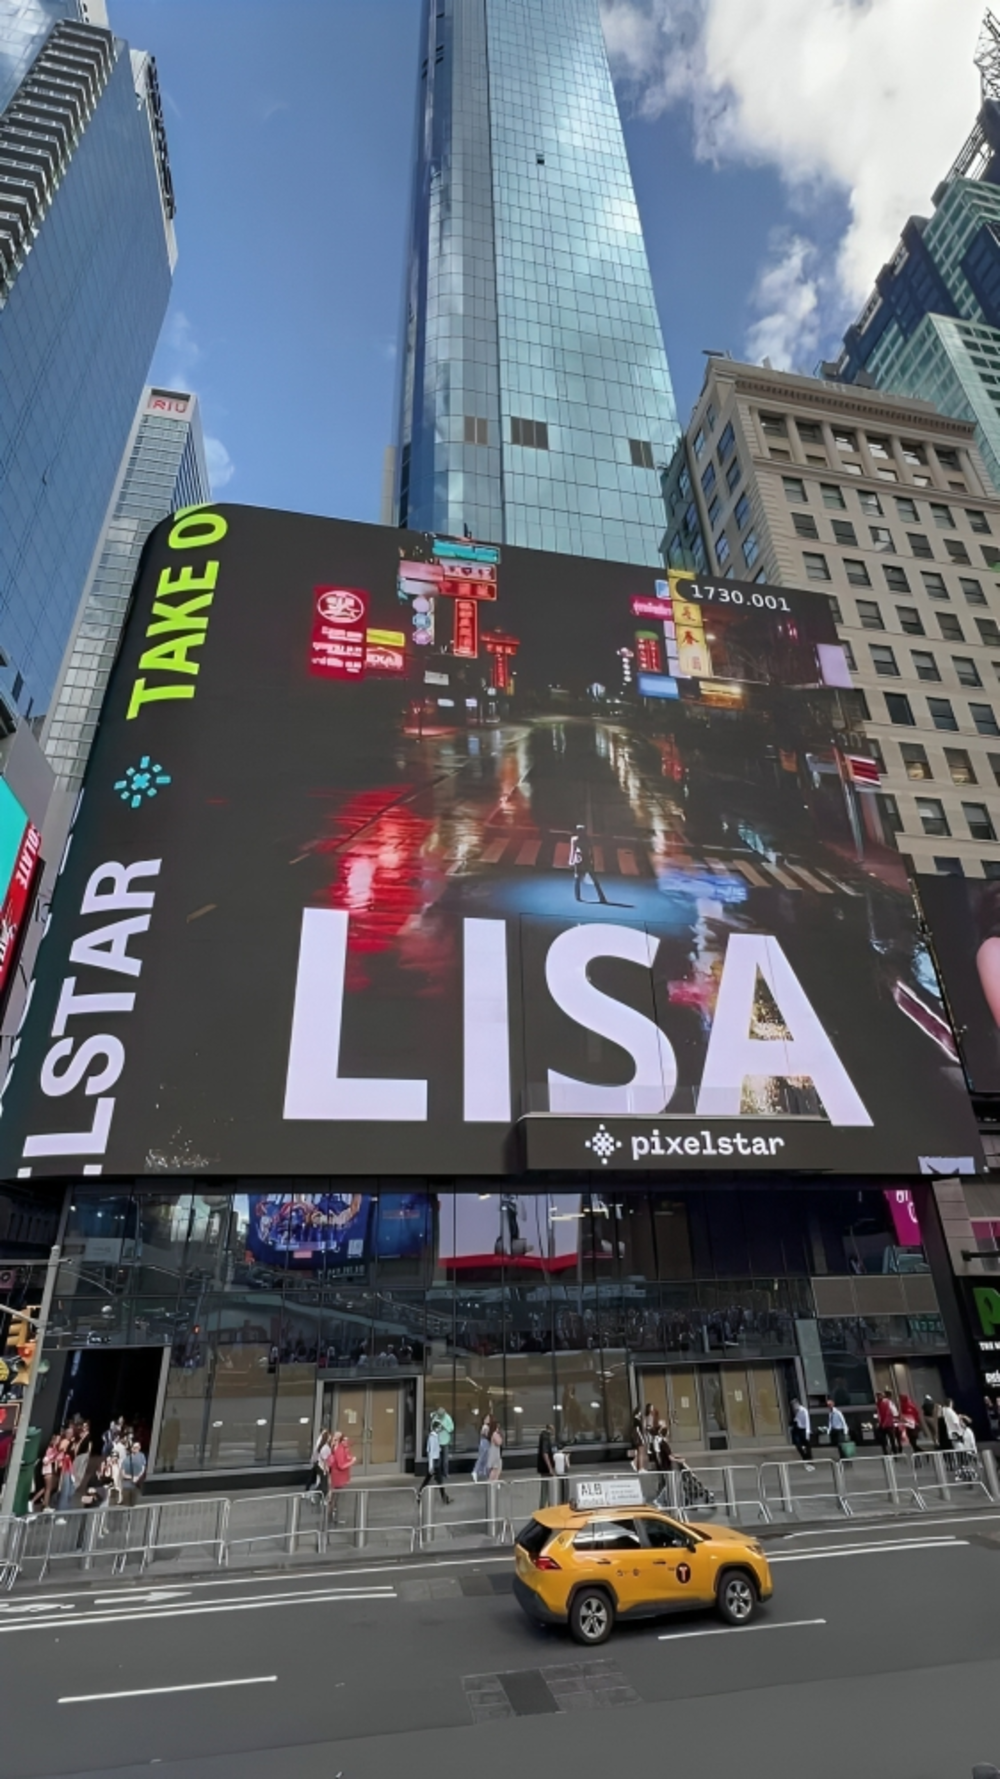 lisa-rockstar-billboard